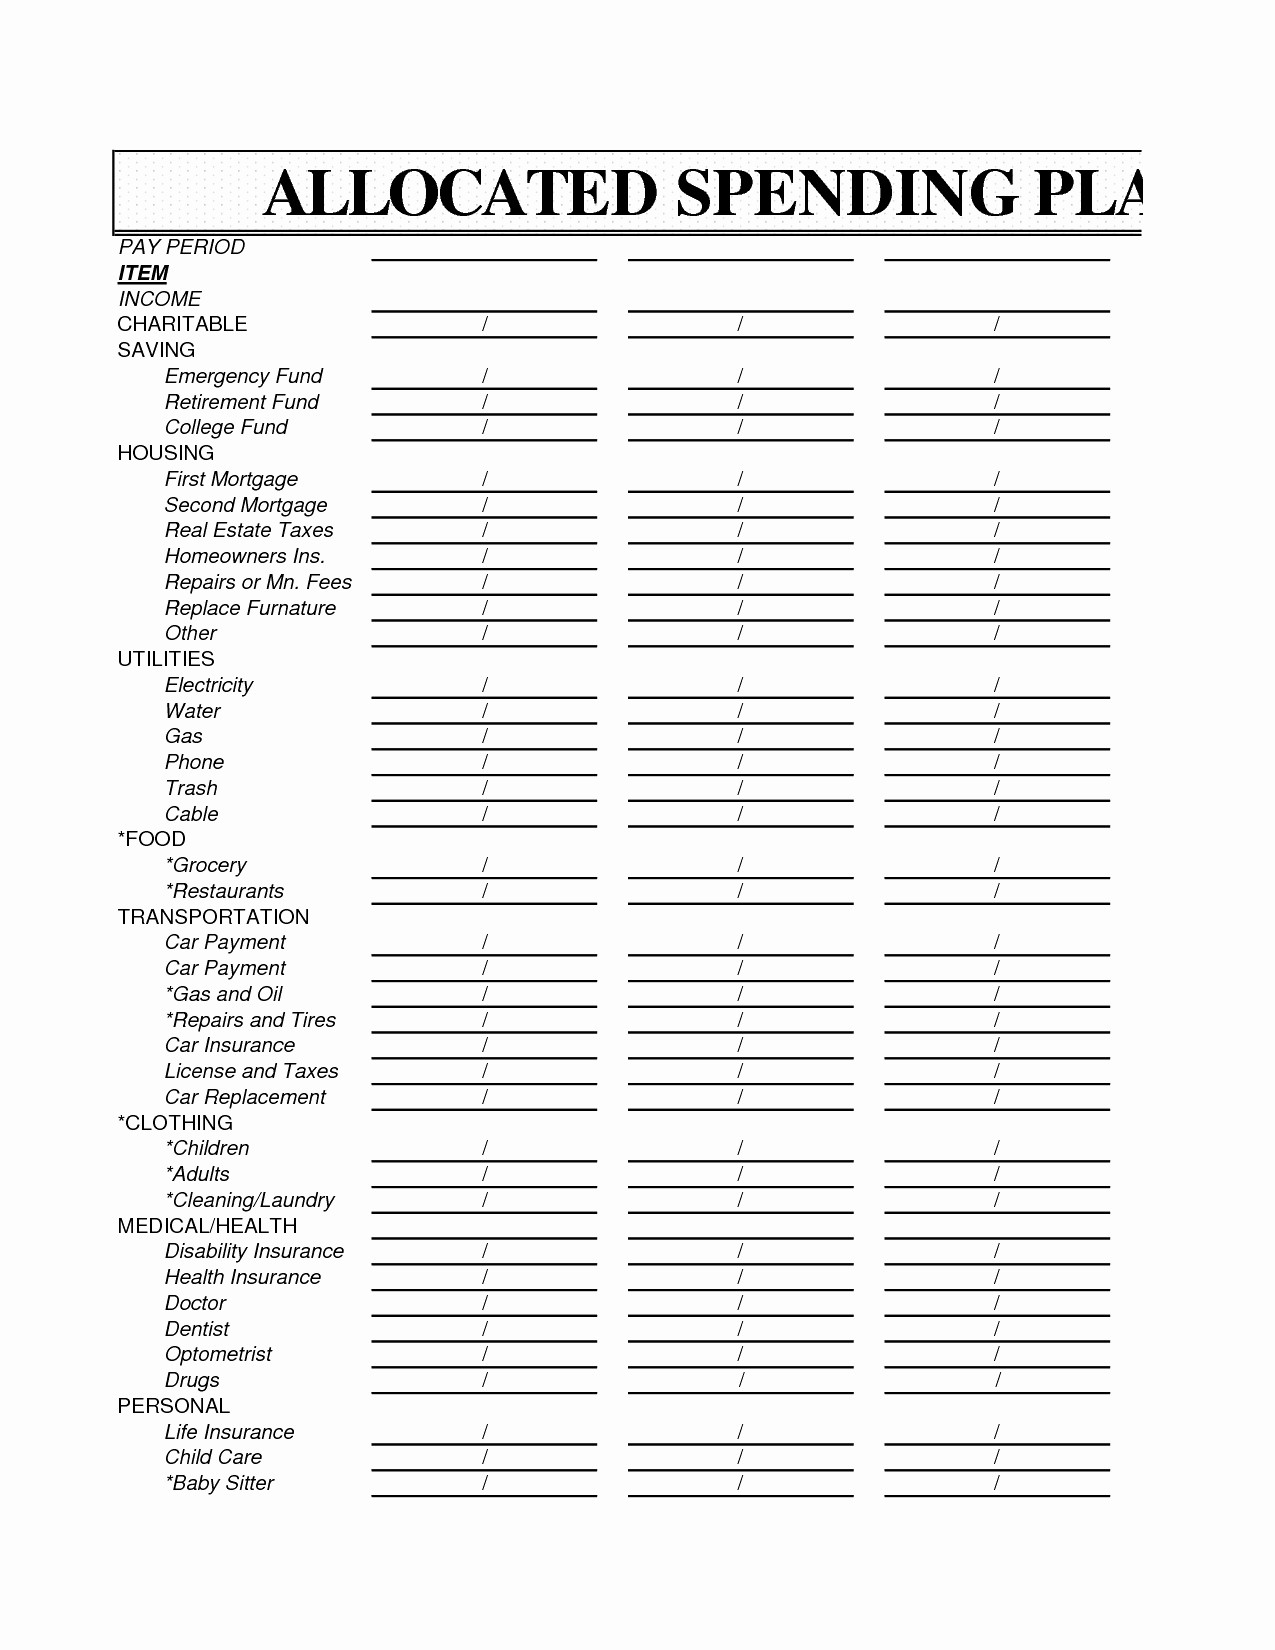 Allocated Spending Plan Form New Vfix365